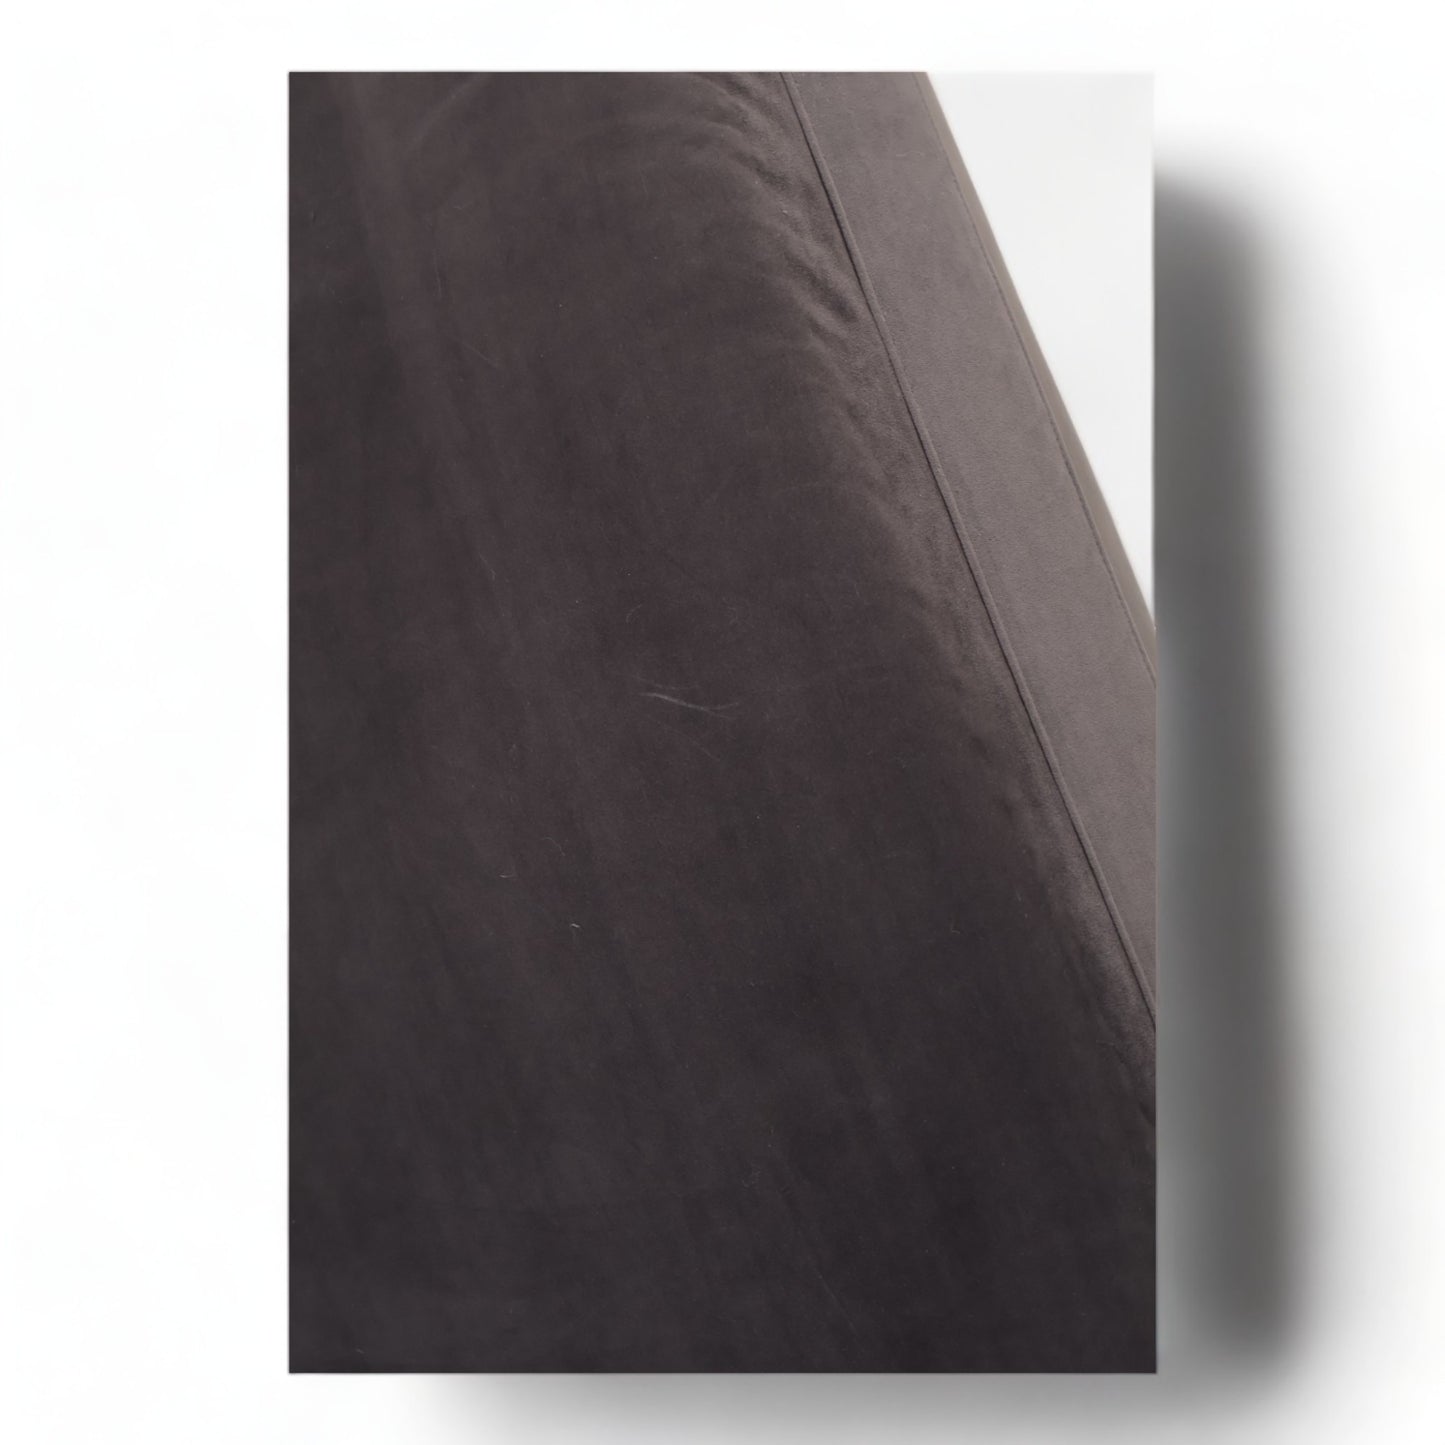 Nyrenset | Mørk grå 3-seter sofa i velur